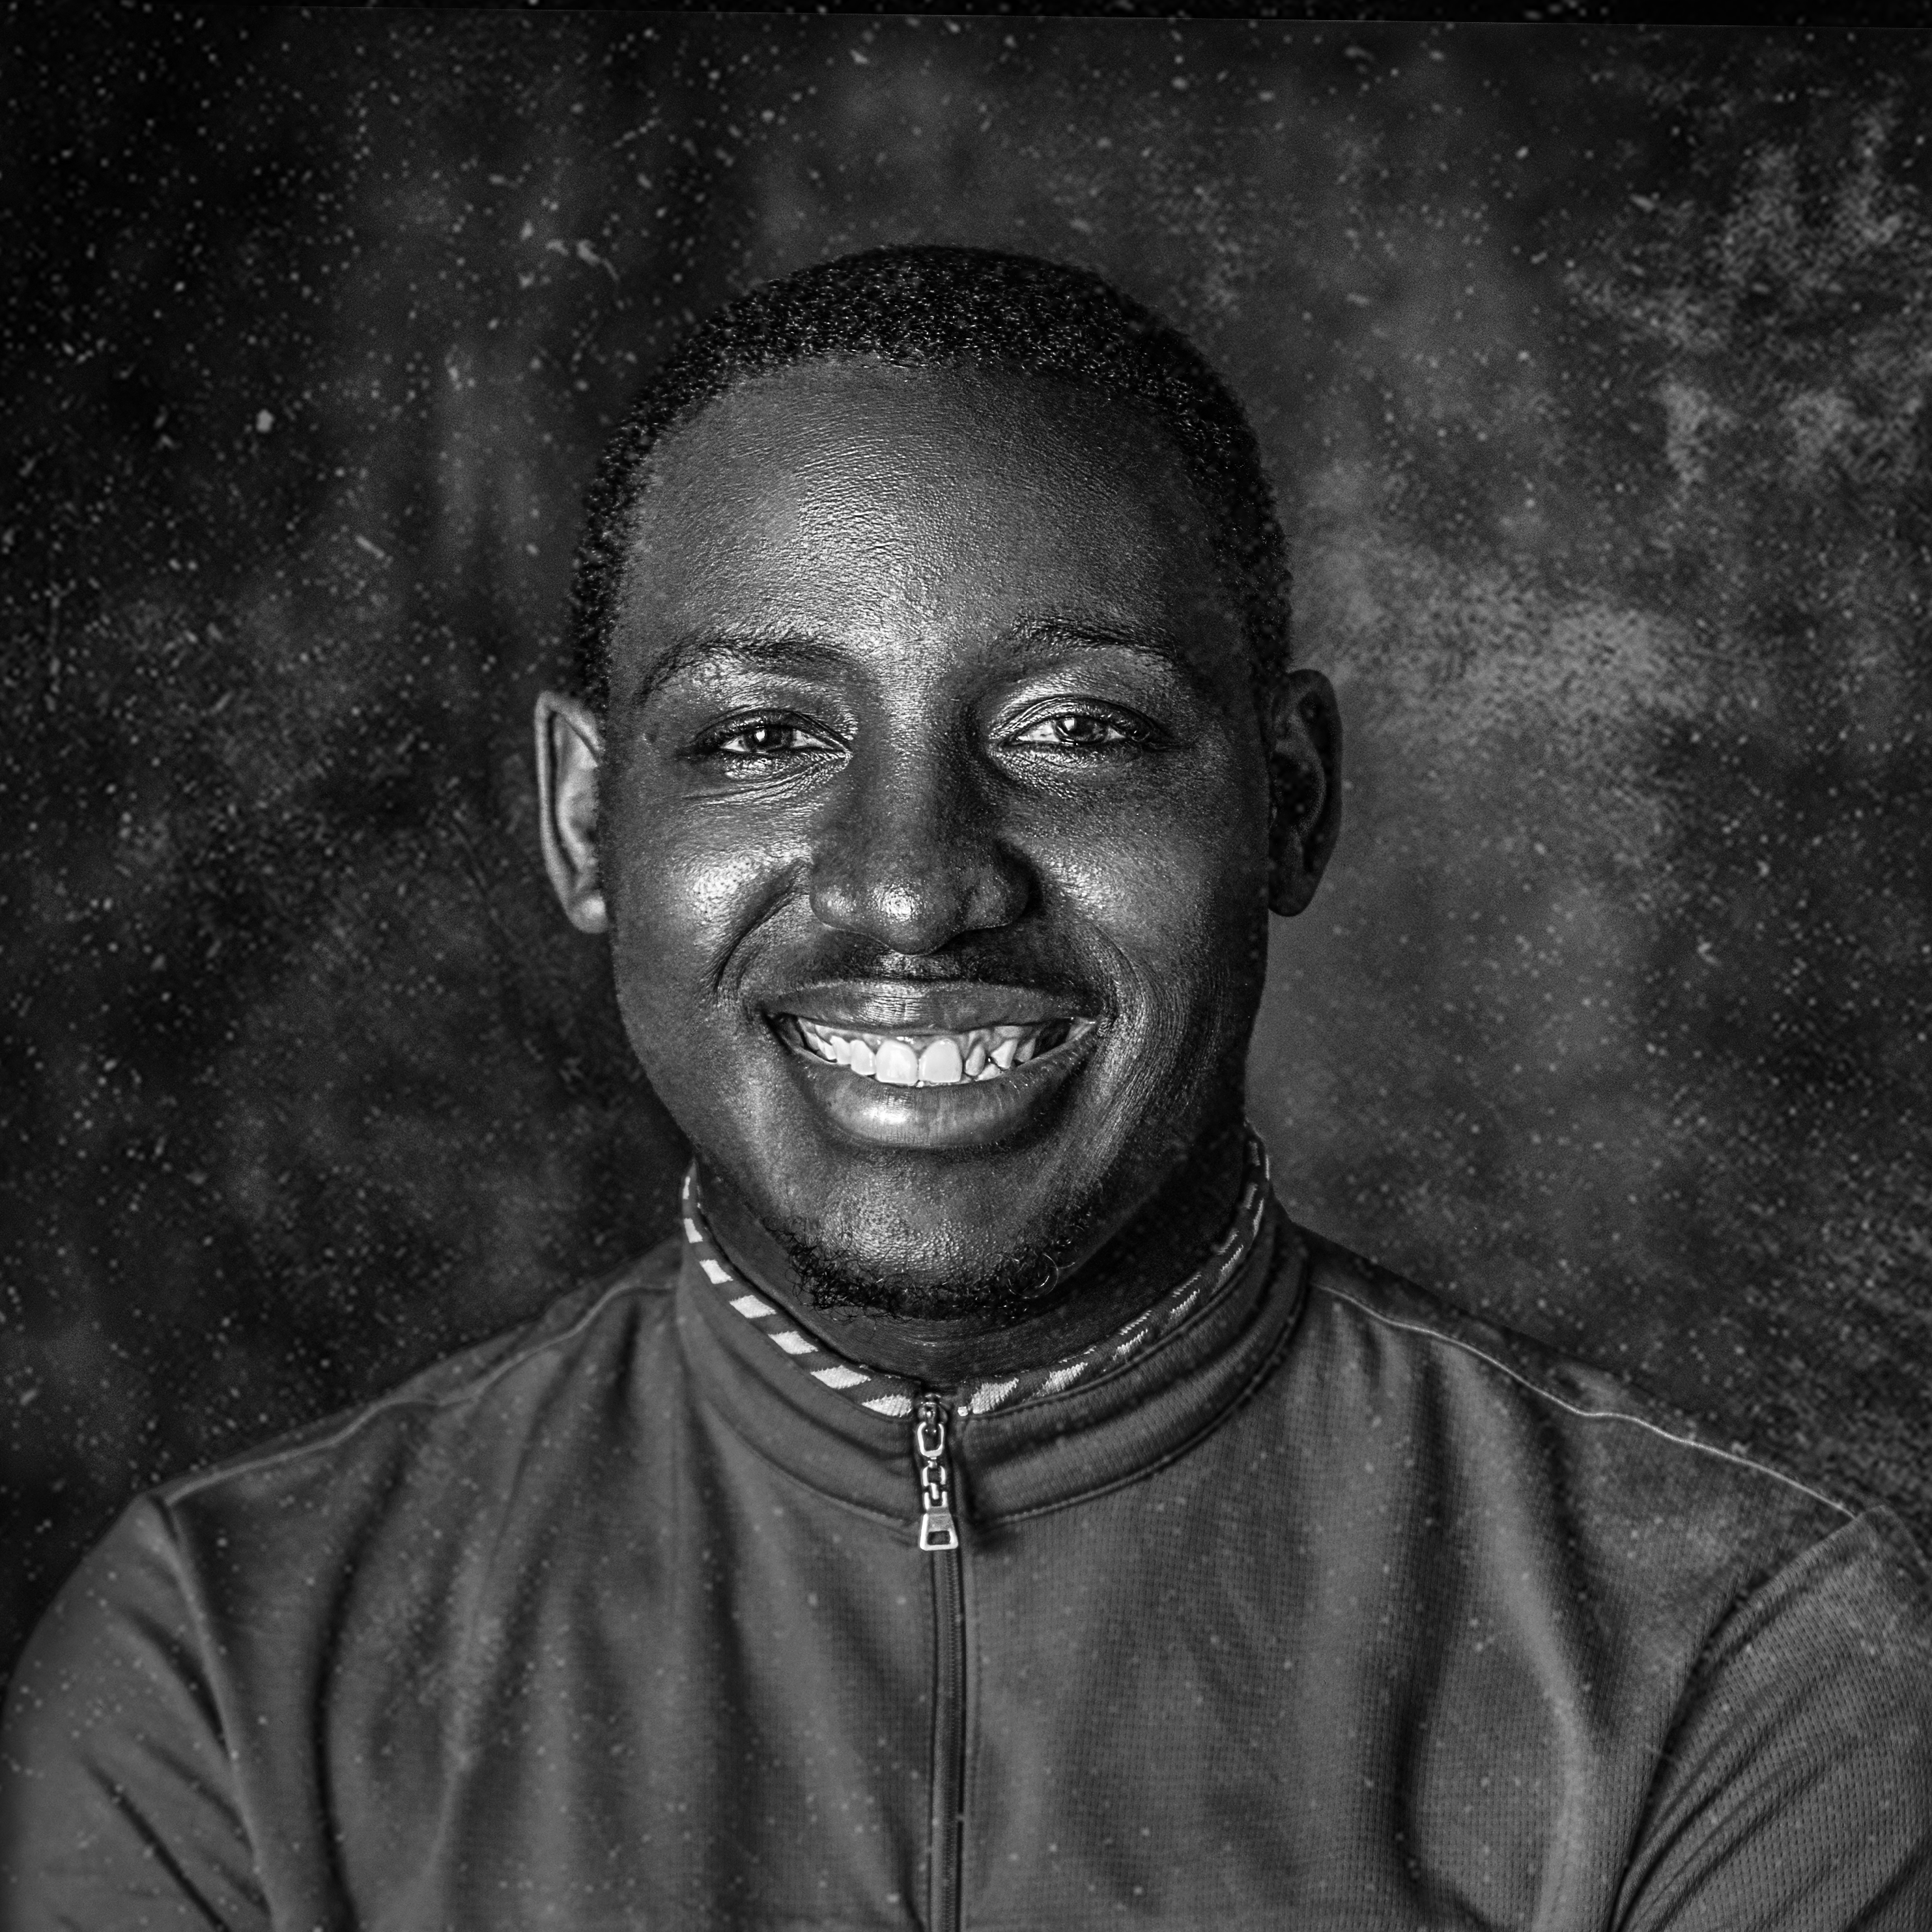 Alagbe Oluwatoba Emmanuel